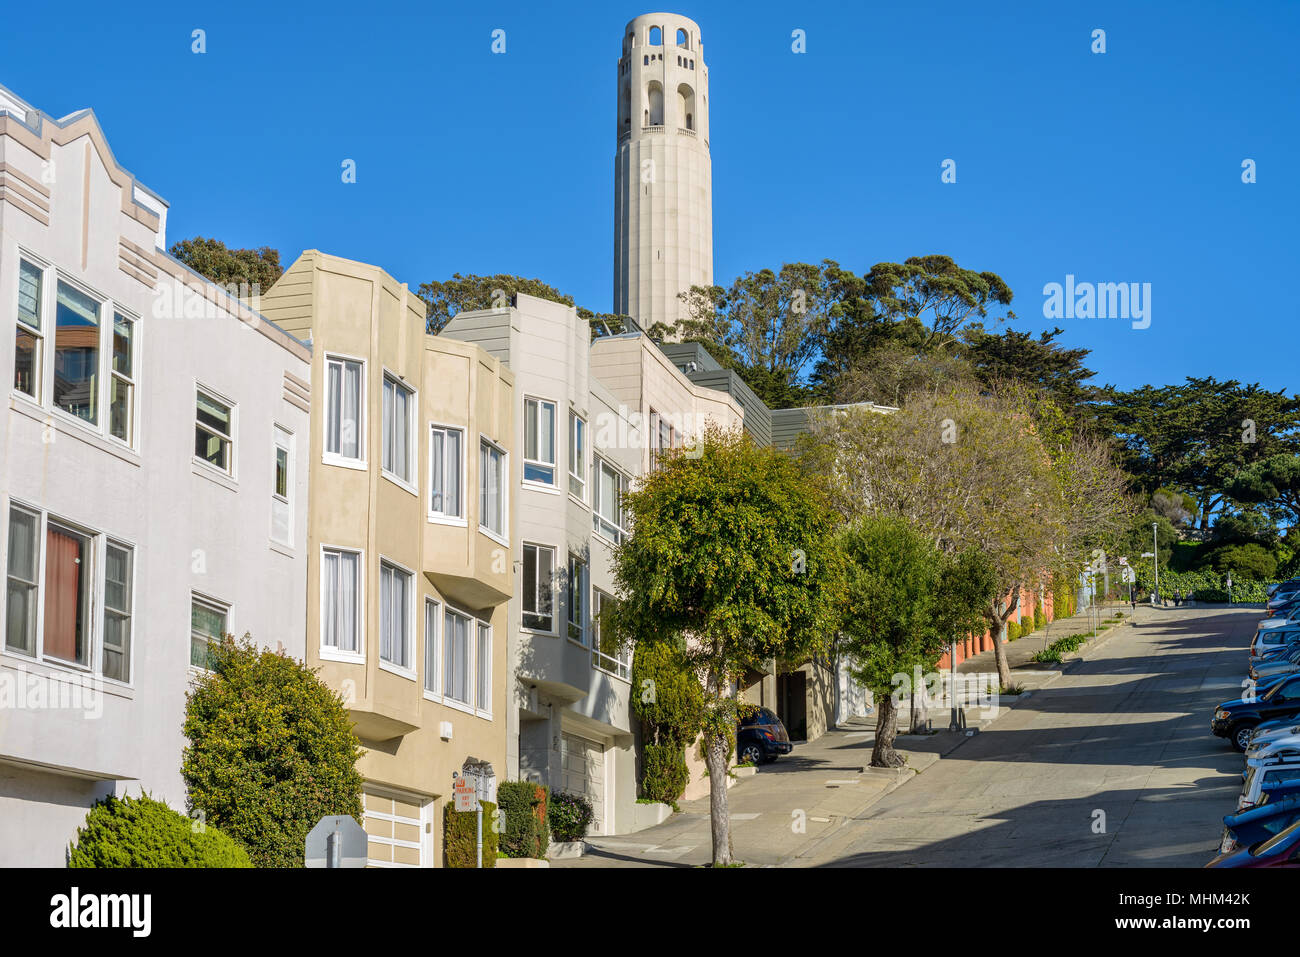 Coit Tower - A close-up view of Coit Tower in Telegraph Hill neighborhood, as seen from steep Filbert Street, San Francisco, California, USA. Stock Photo